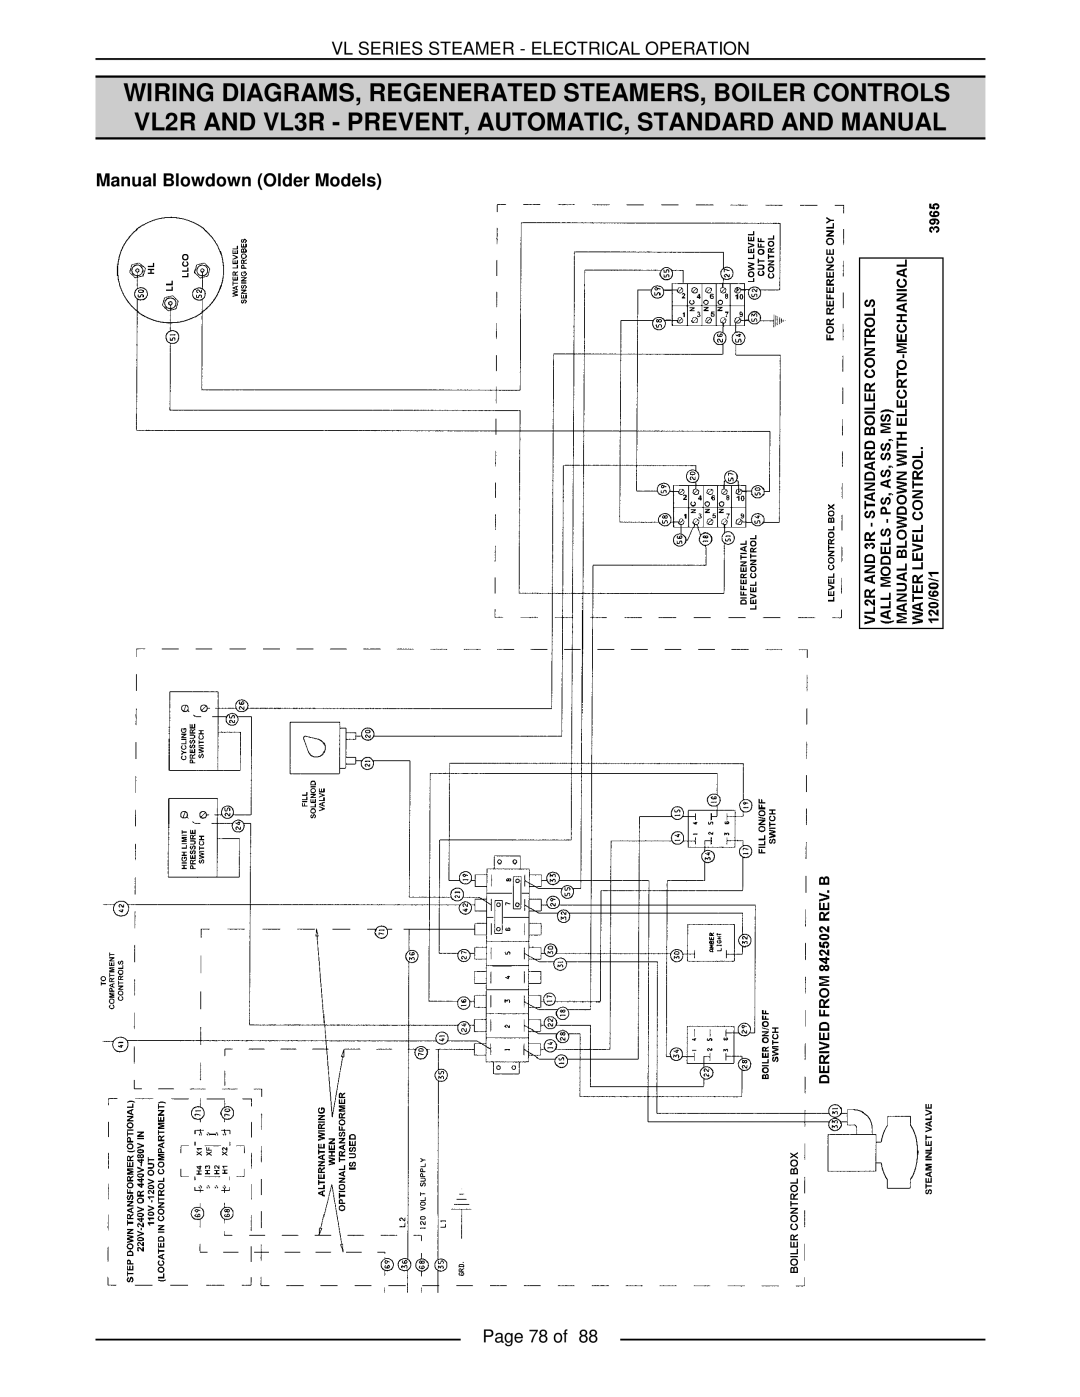 Vulcan-Hart VL3GPS, VL3GMS, VL2GMS Vl Series Steamer - Electrical Operation, Manual Blowdown Older Models, Page 78 of 